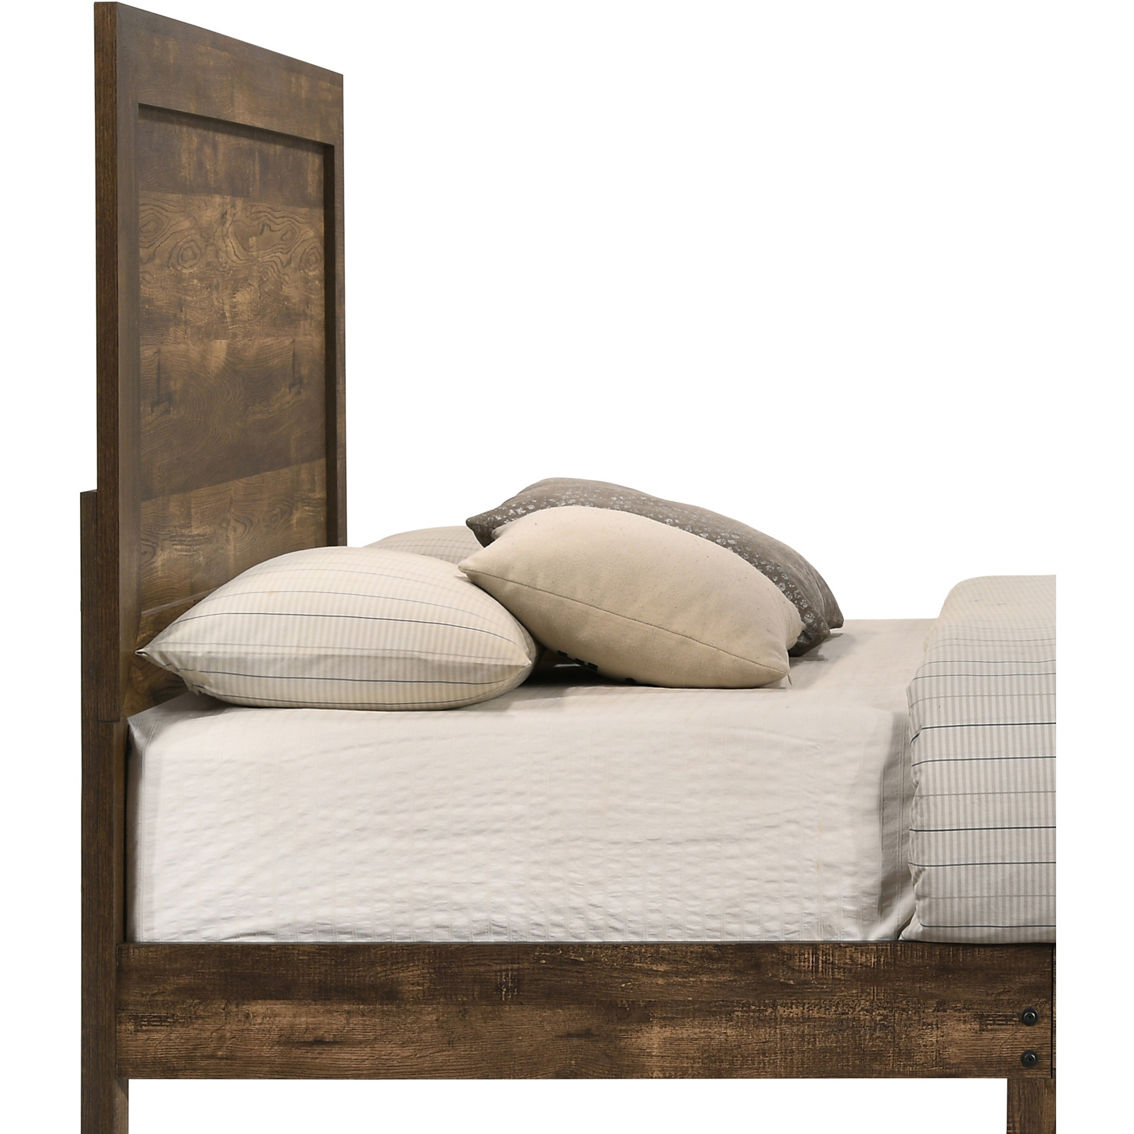 Furniture of America Kodo Rustic Wood Panel Bed - Image 2 of 3